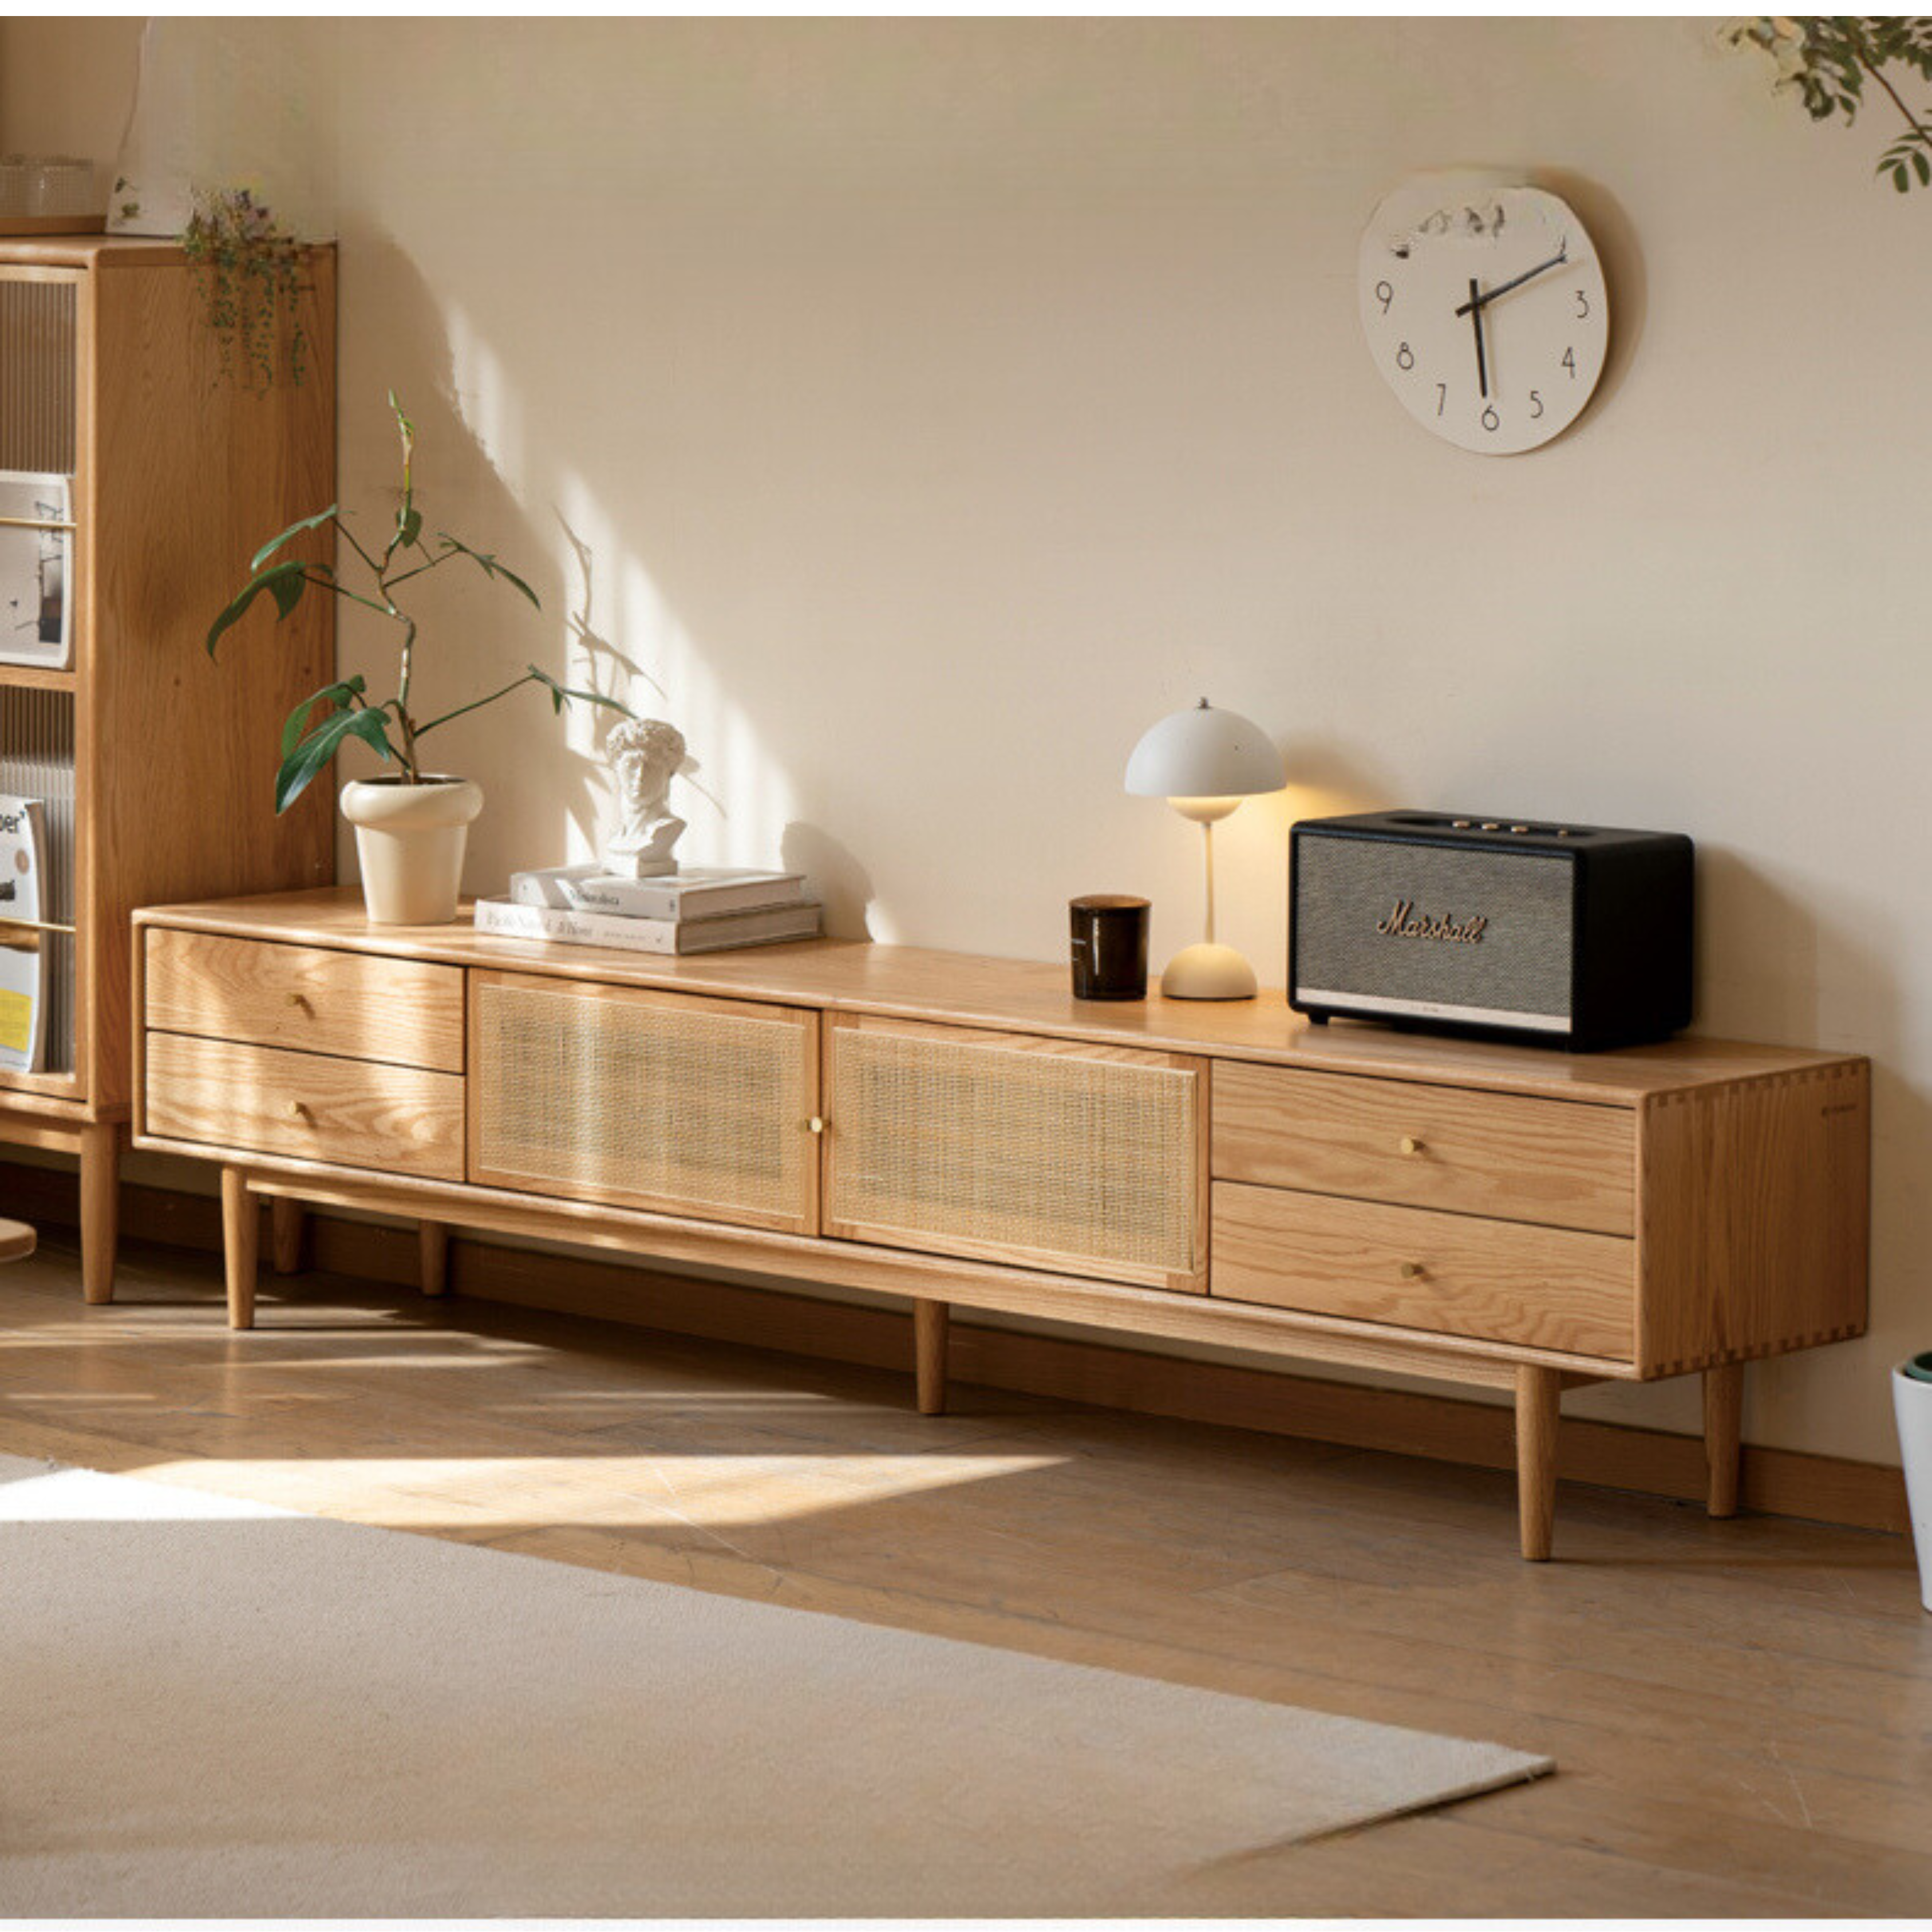 Oak solid wood Rattan TV cabinet: